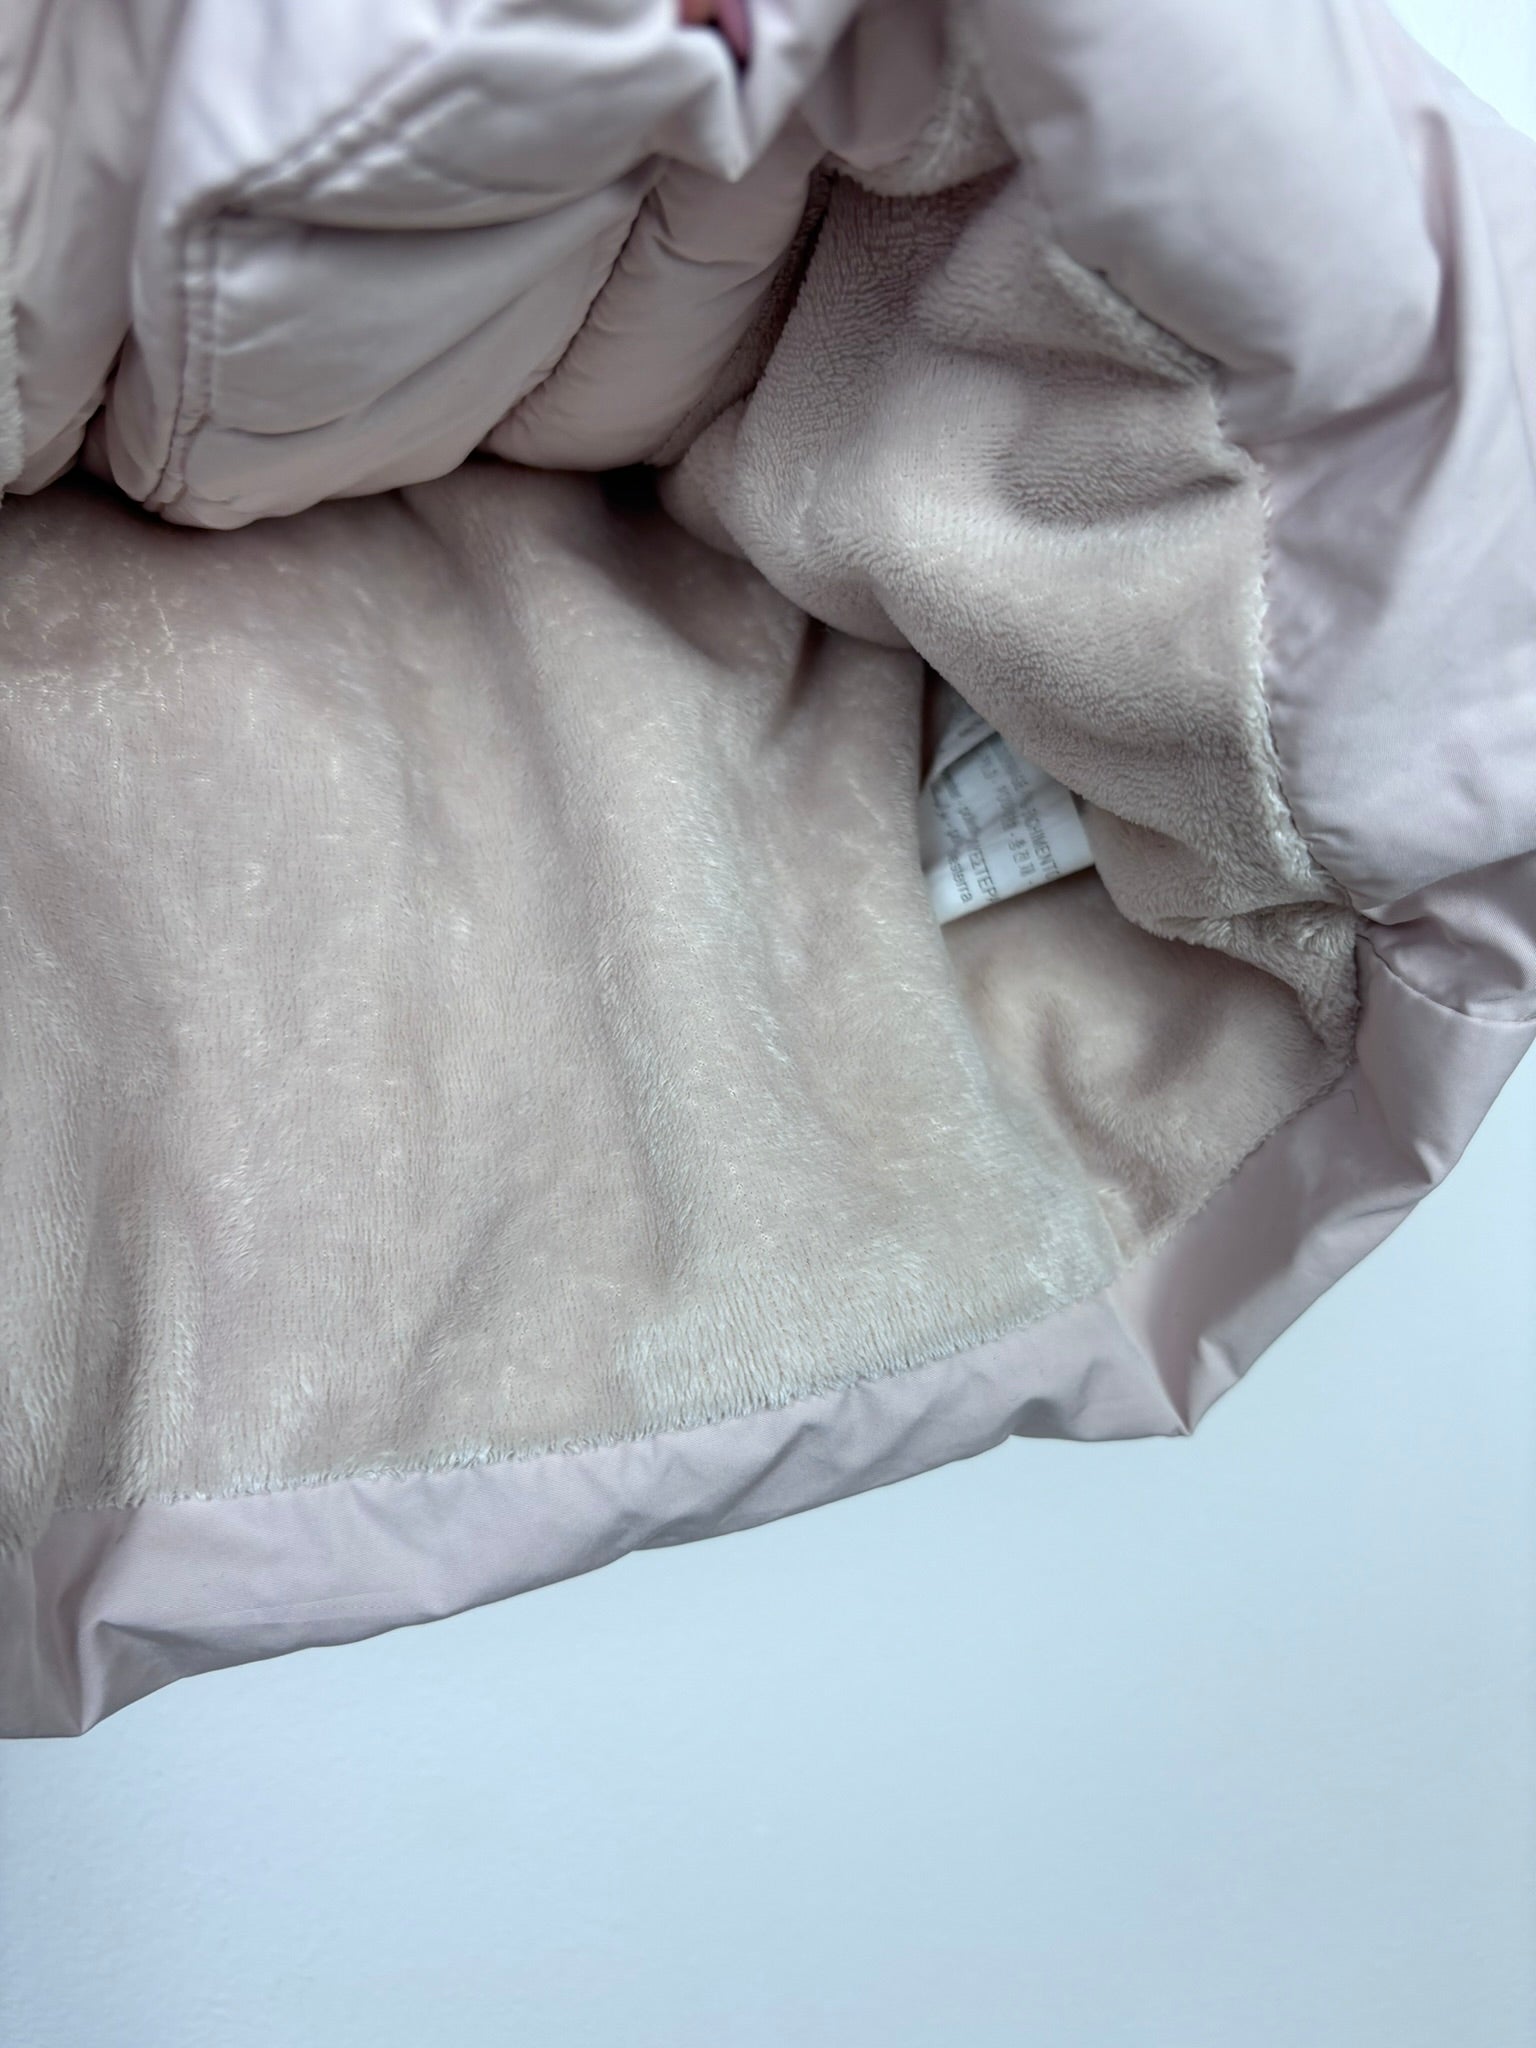 Zara 3-6 Months-Coats-Second Snuggle Preloved